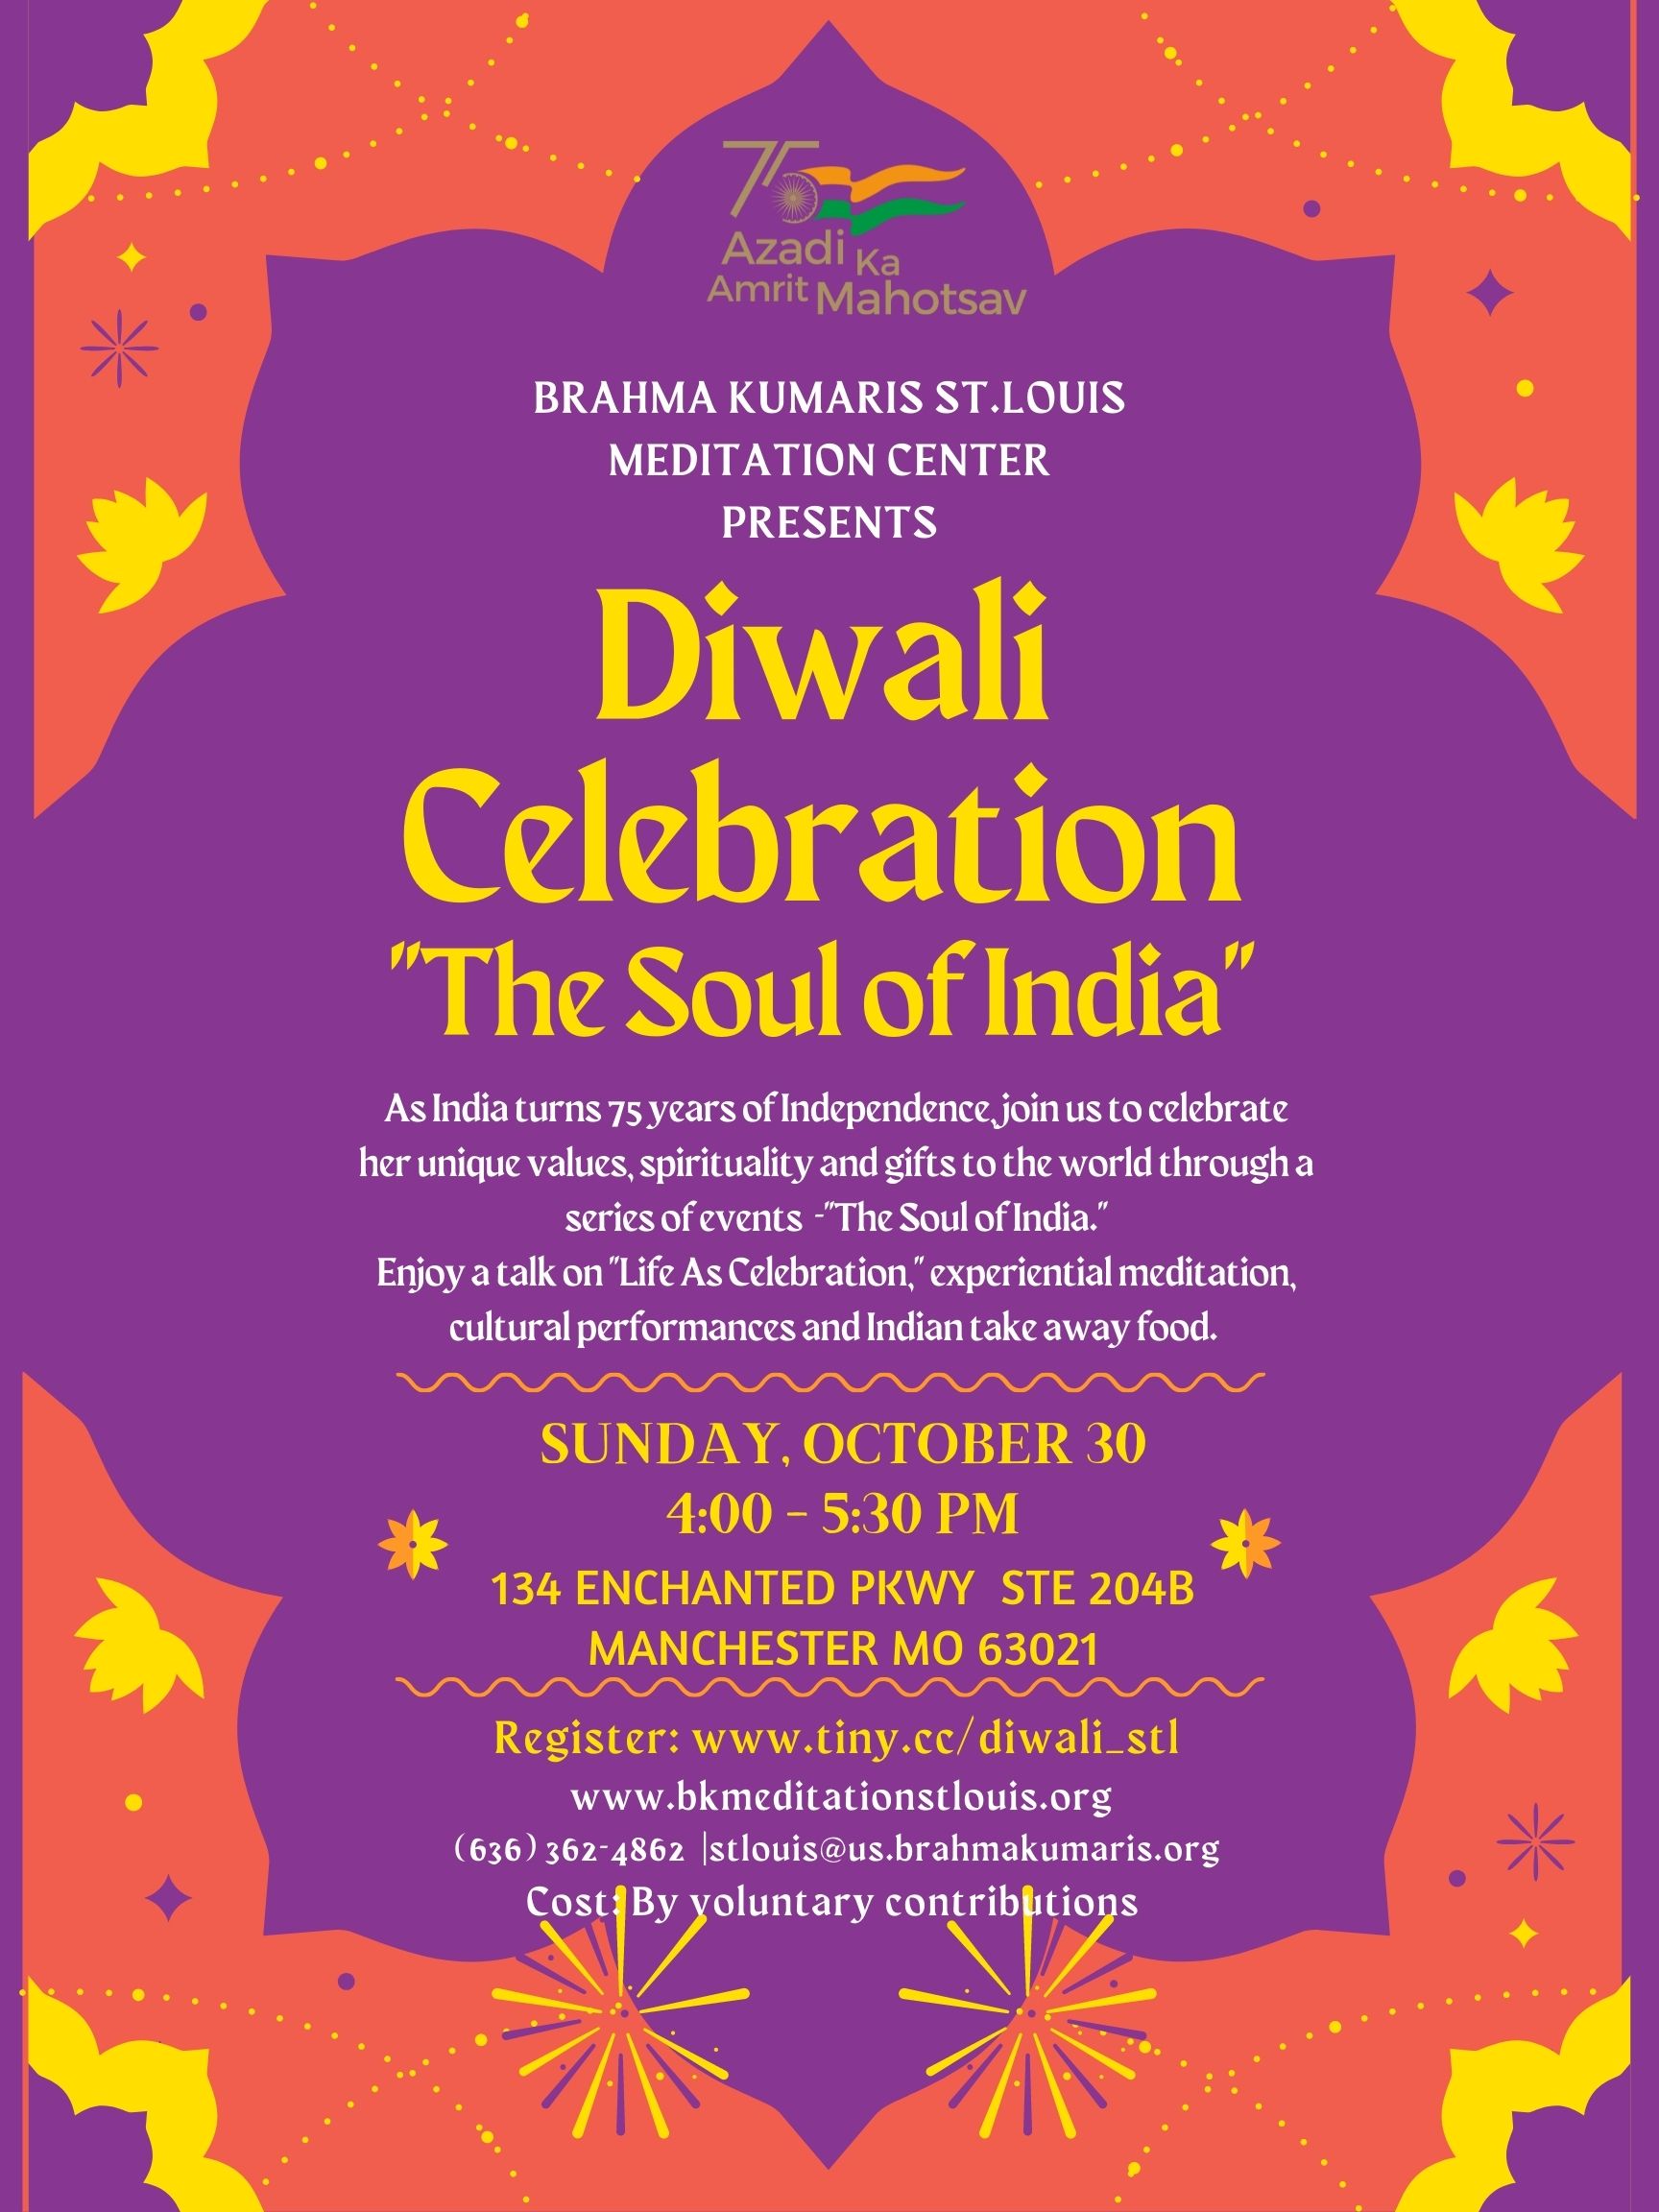 Diwali Celebration "The Soul of India"